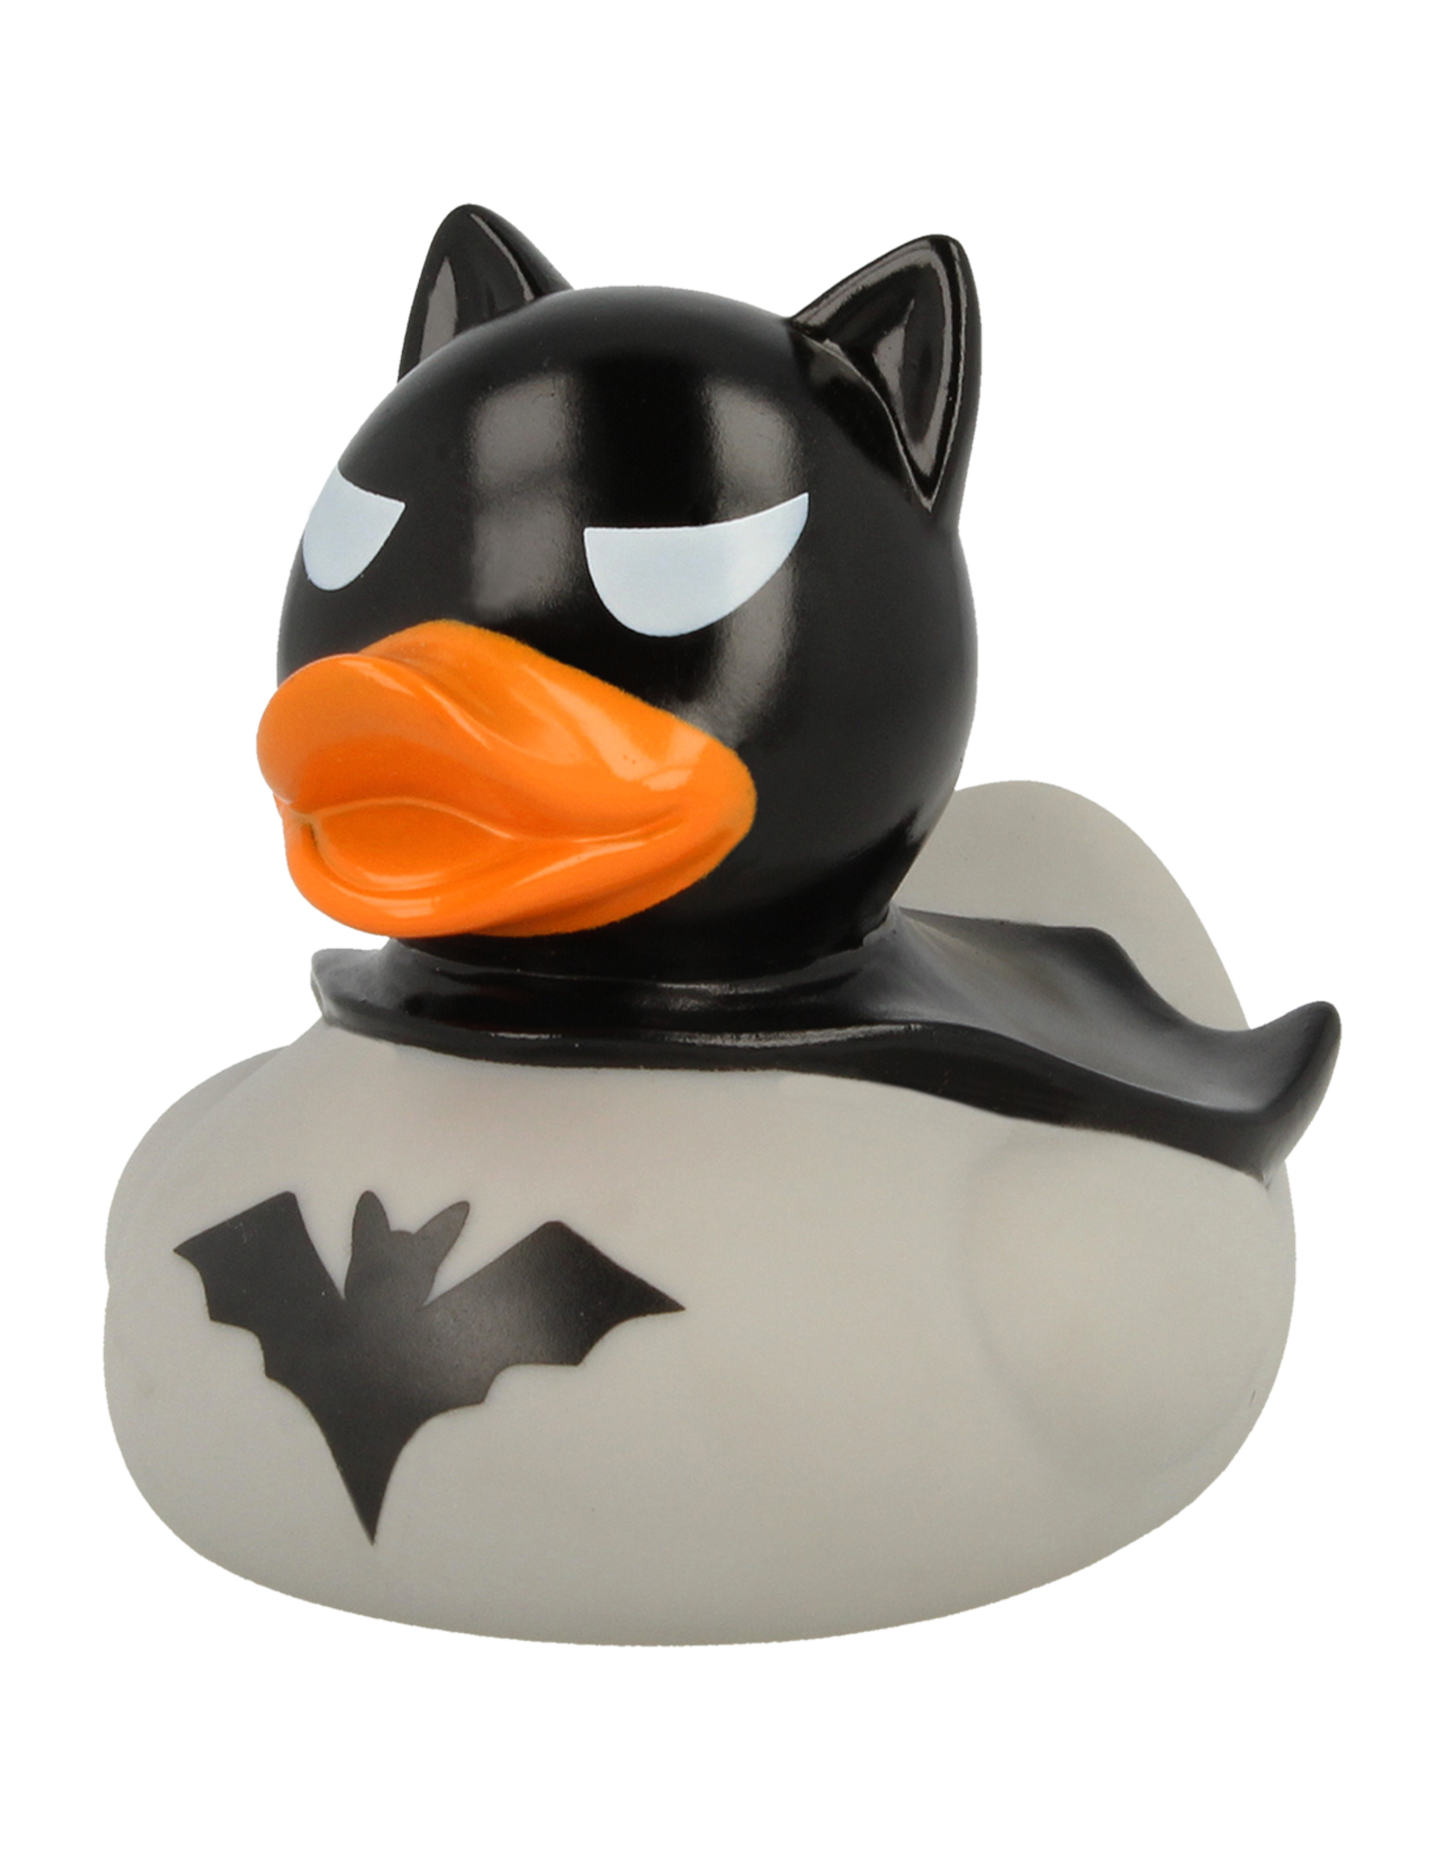 Batman "The Dark Duck" Rubber Duck